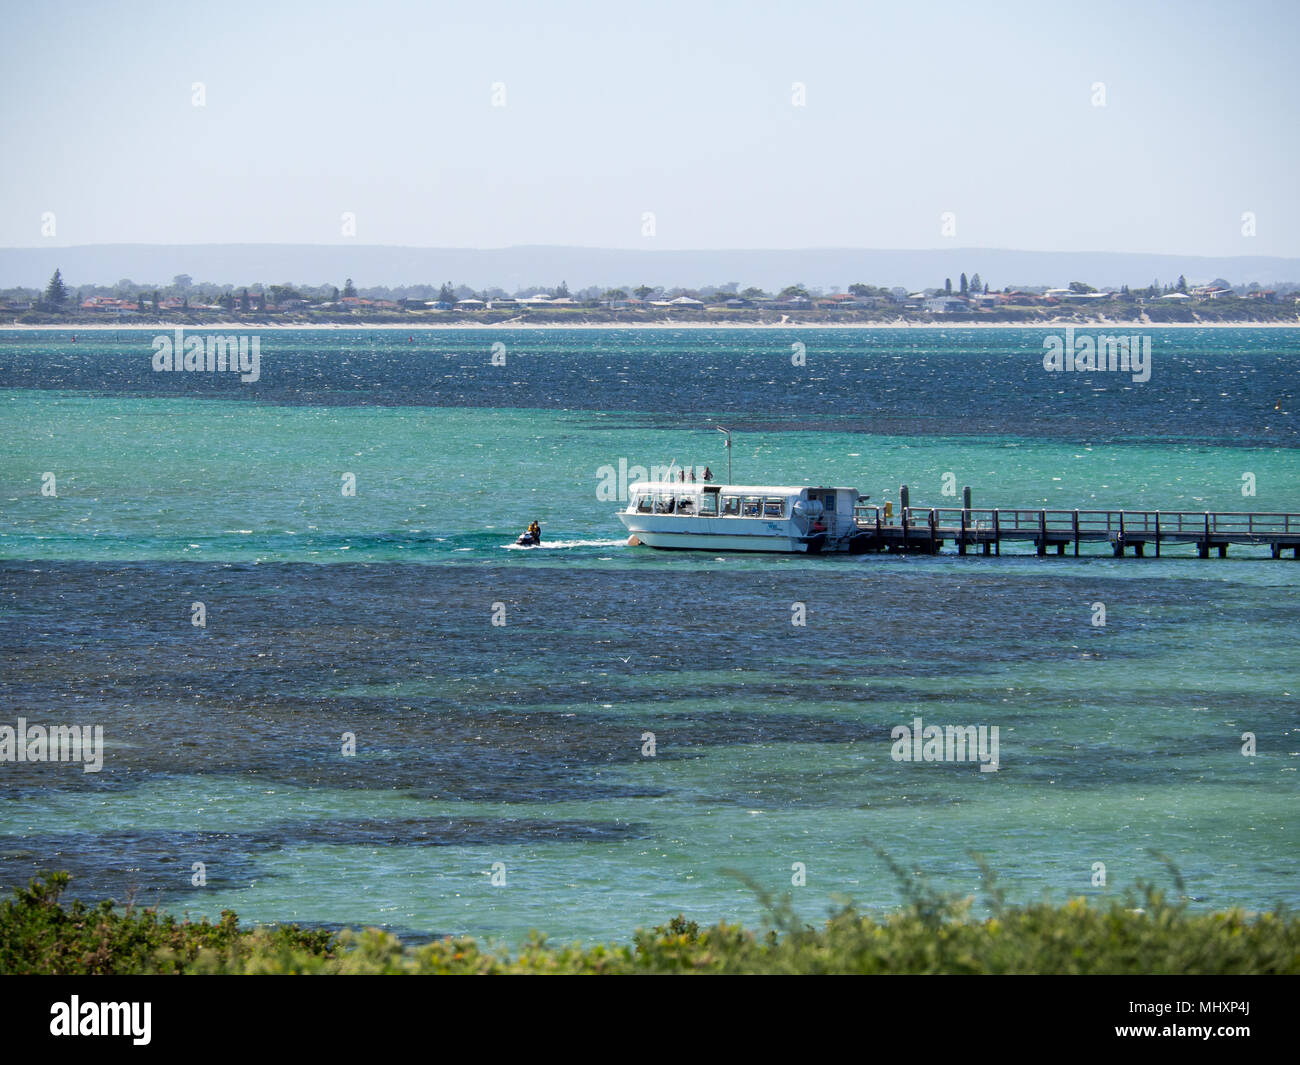 Passenger ferry for Penguin Island, Perth, Western Australia Stock Photo